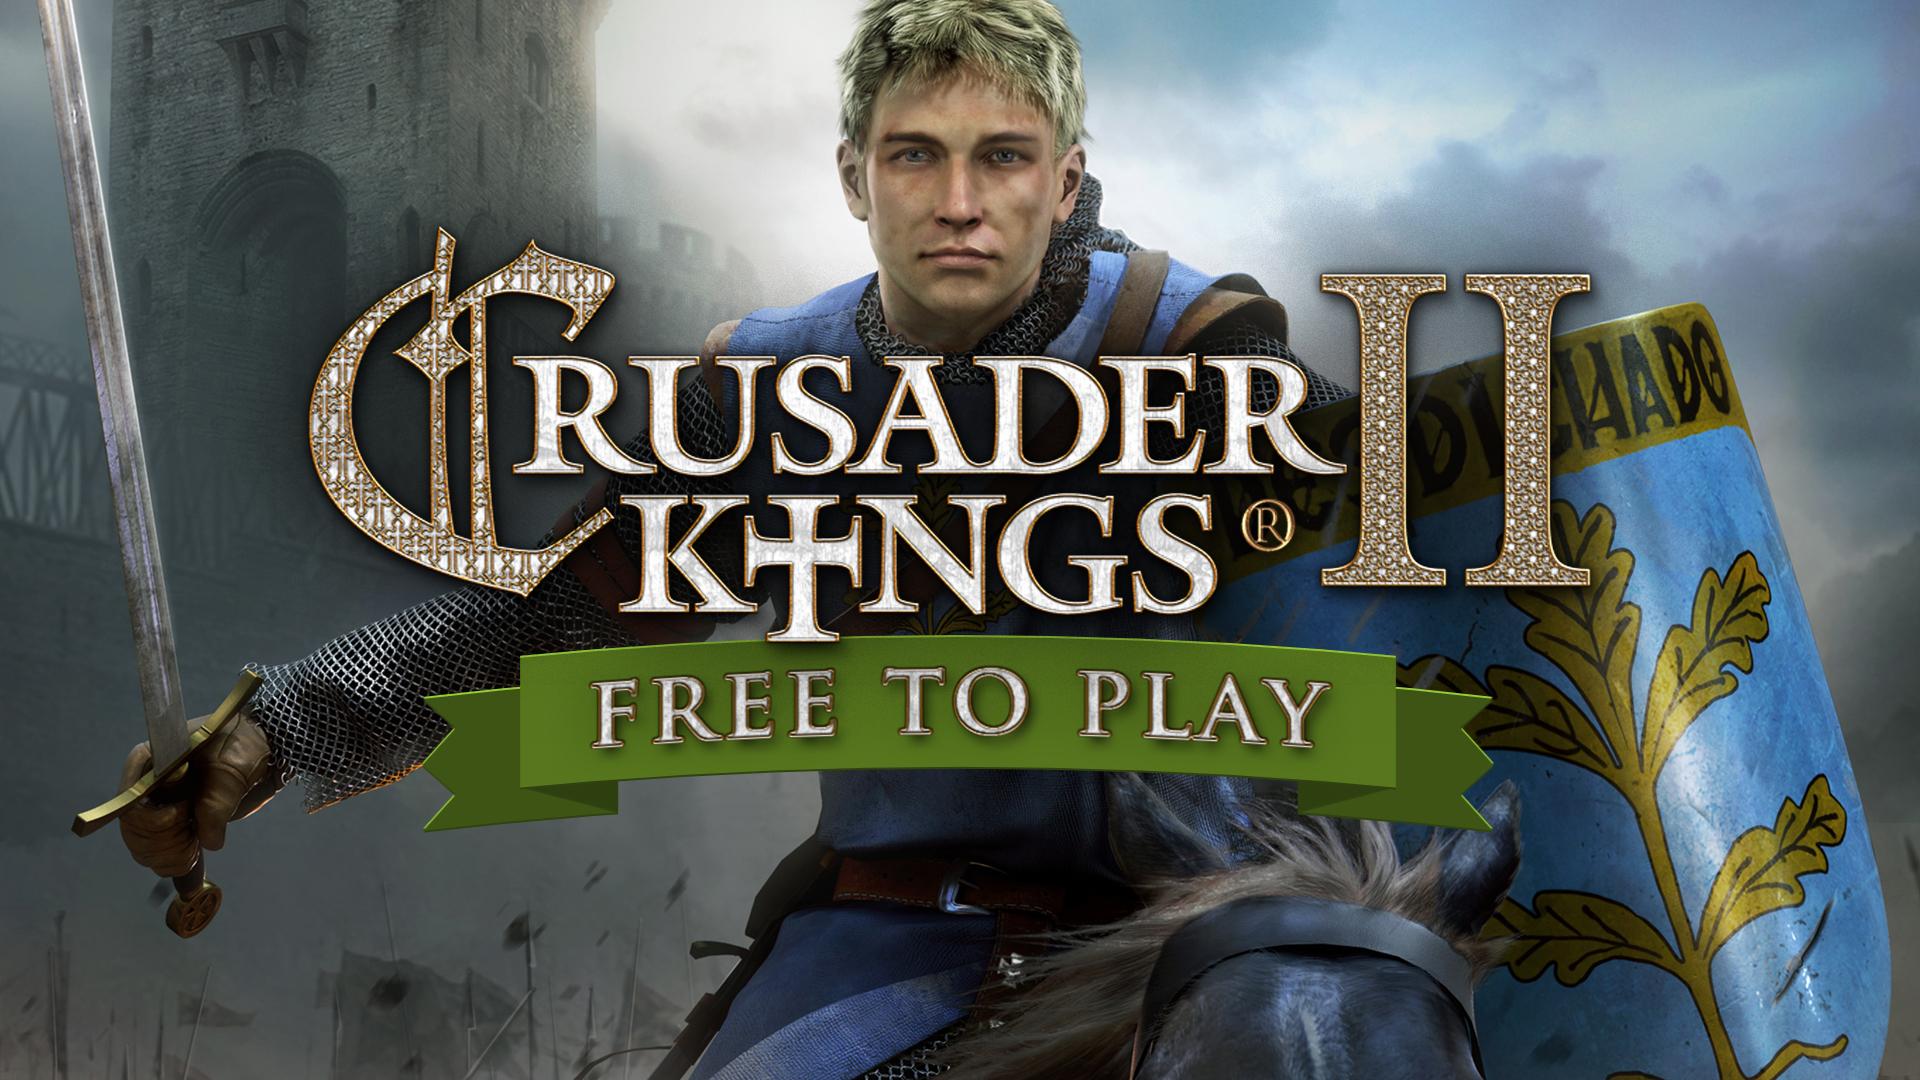 Crusader Kings II PC Game for Free